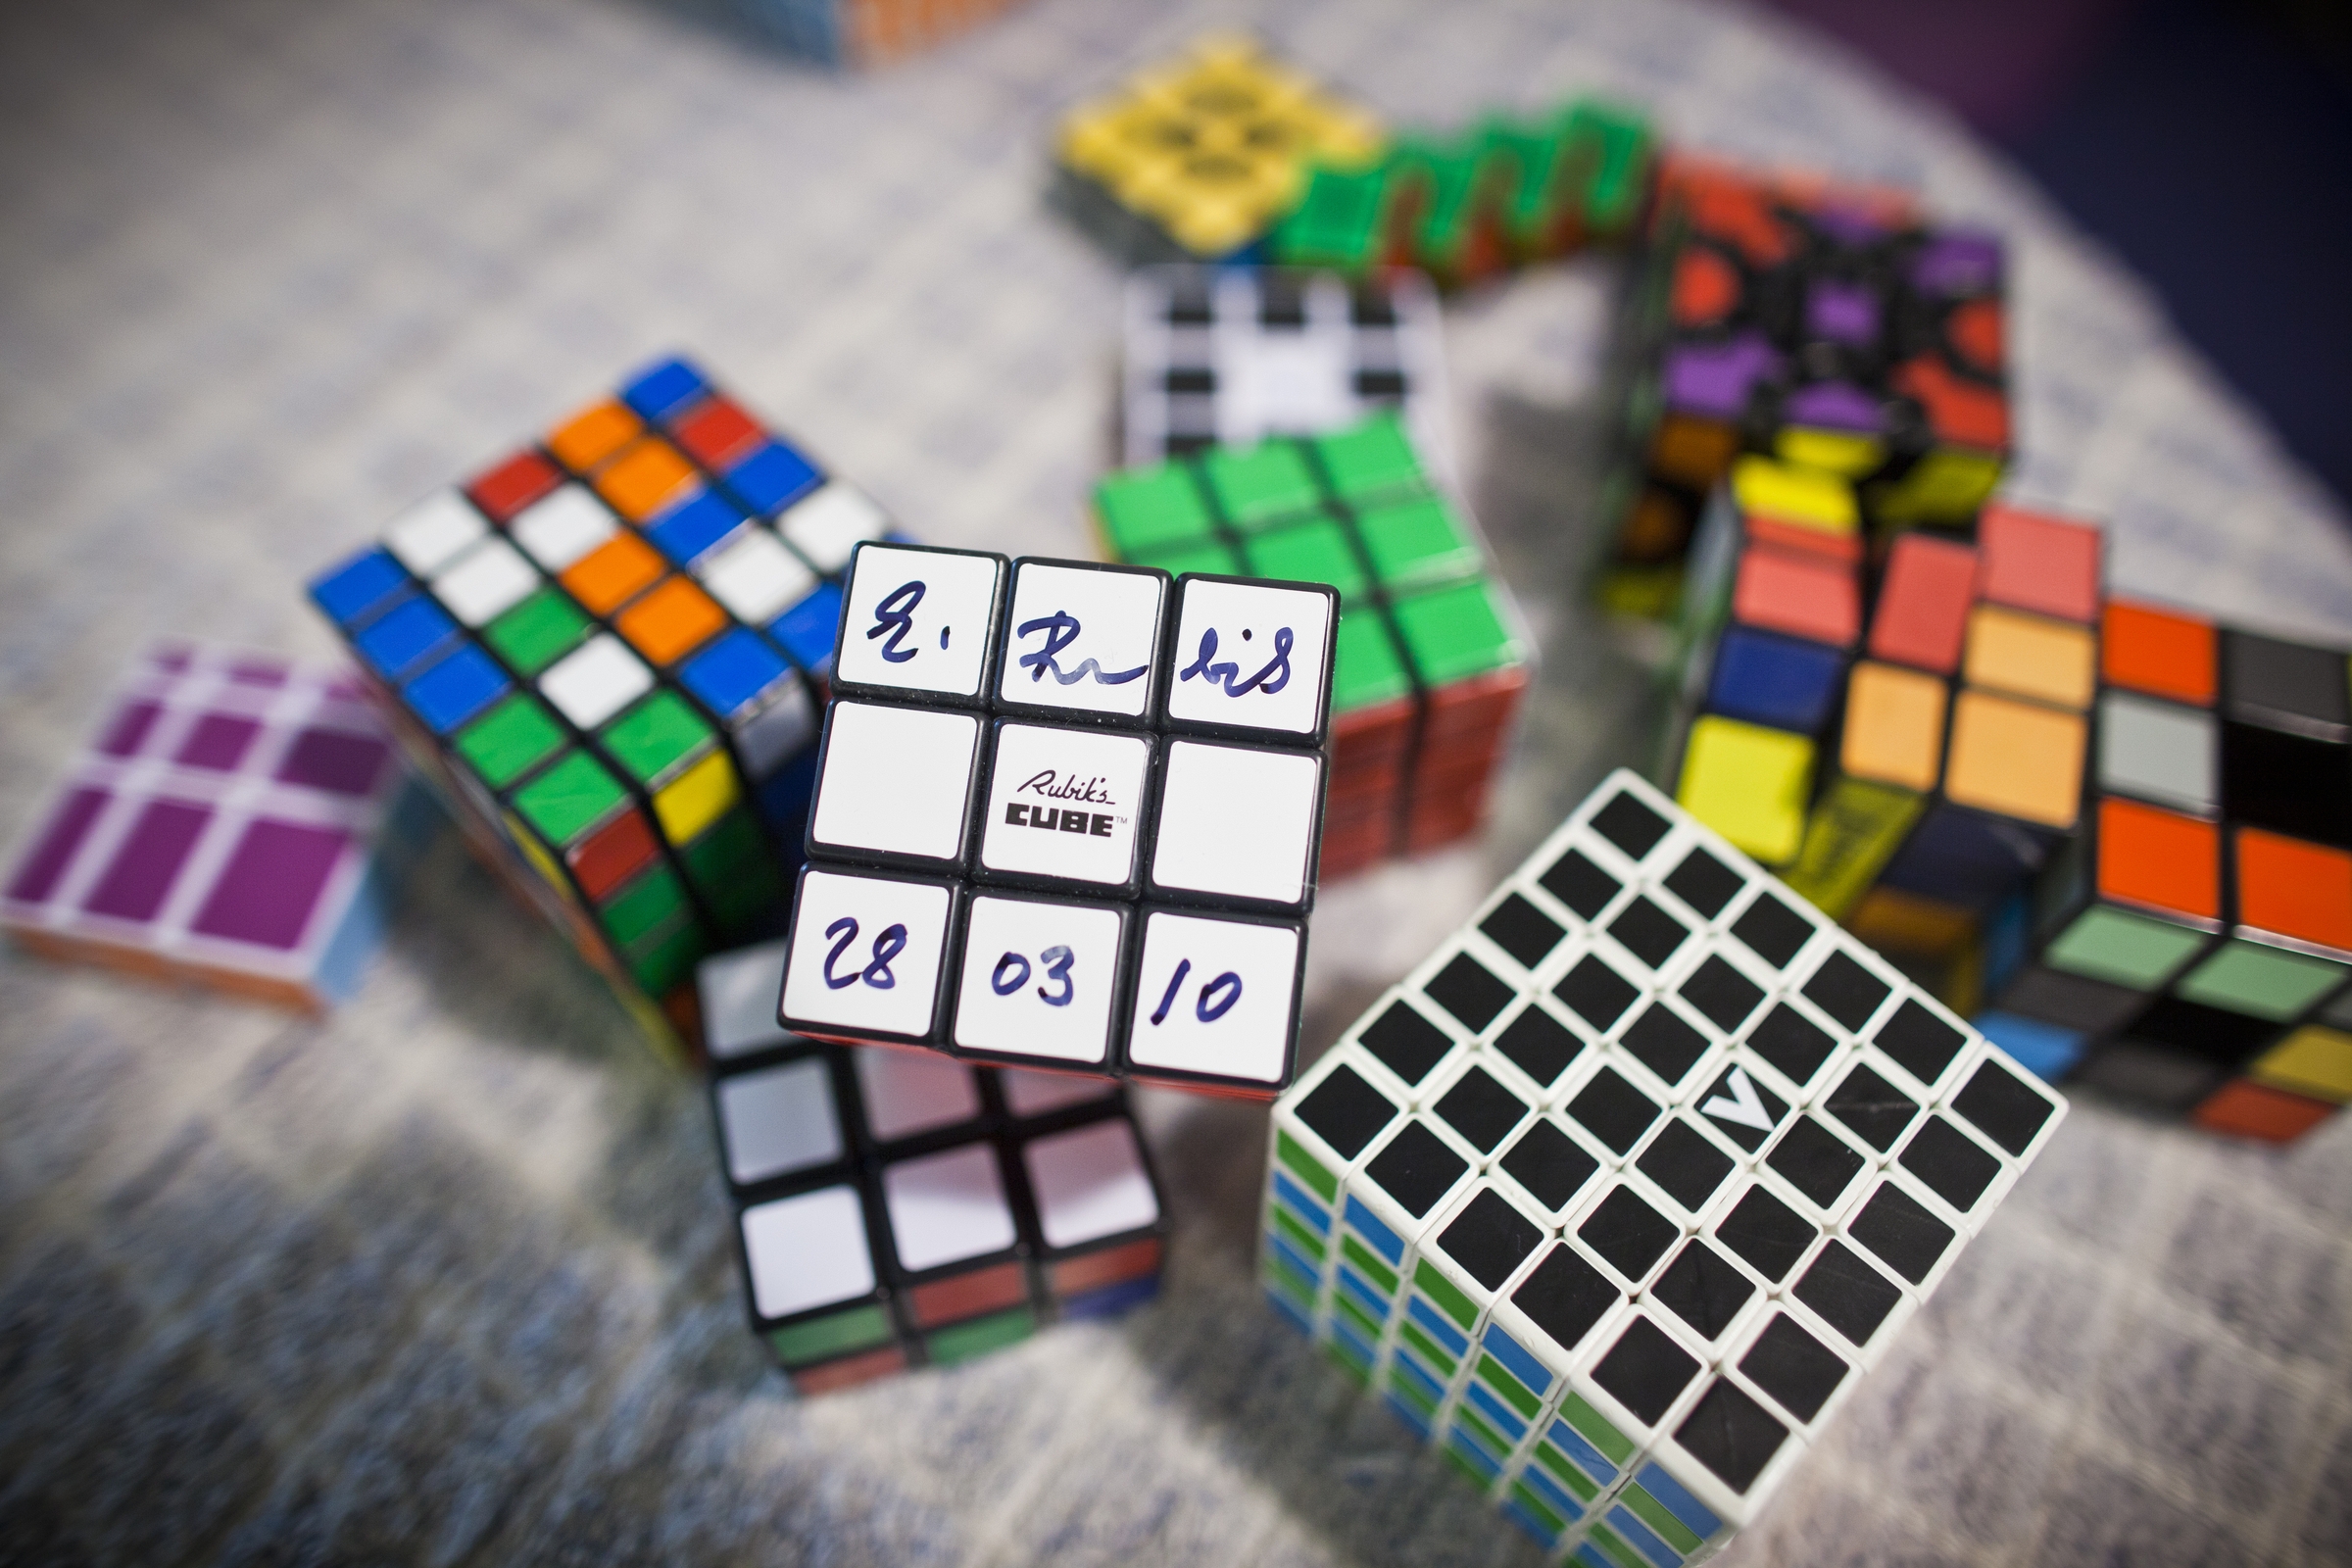 Игра числовые кубики. Кьюб кубик Рубика. Кубик Рубика 15 на 15. Кубик рубик 20 на 20. Разные кубики рубики.